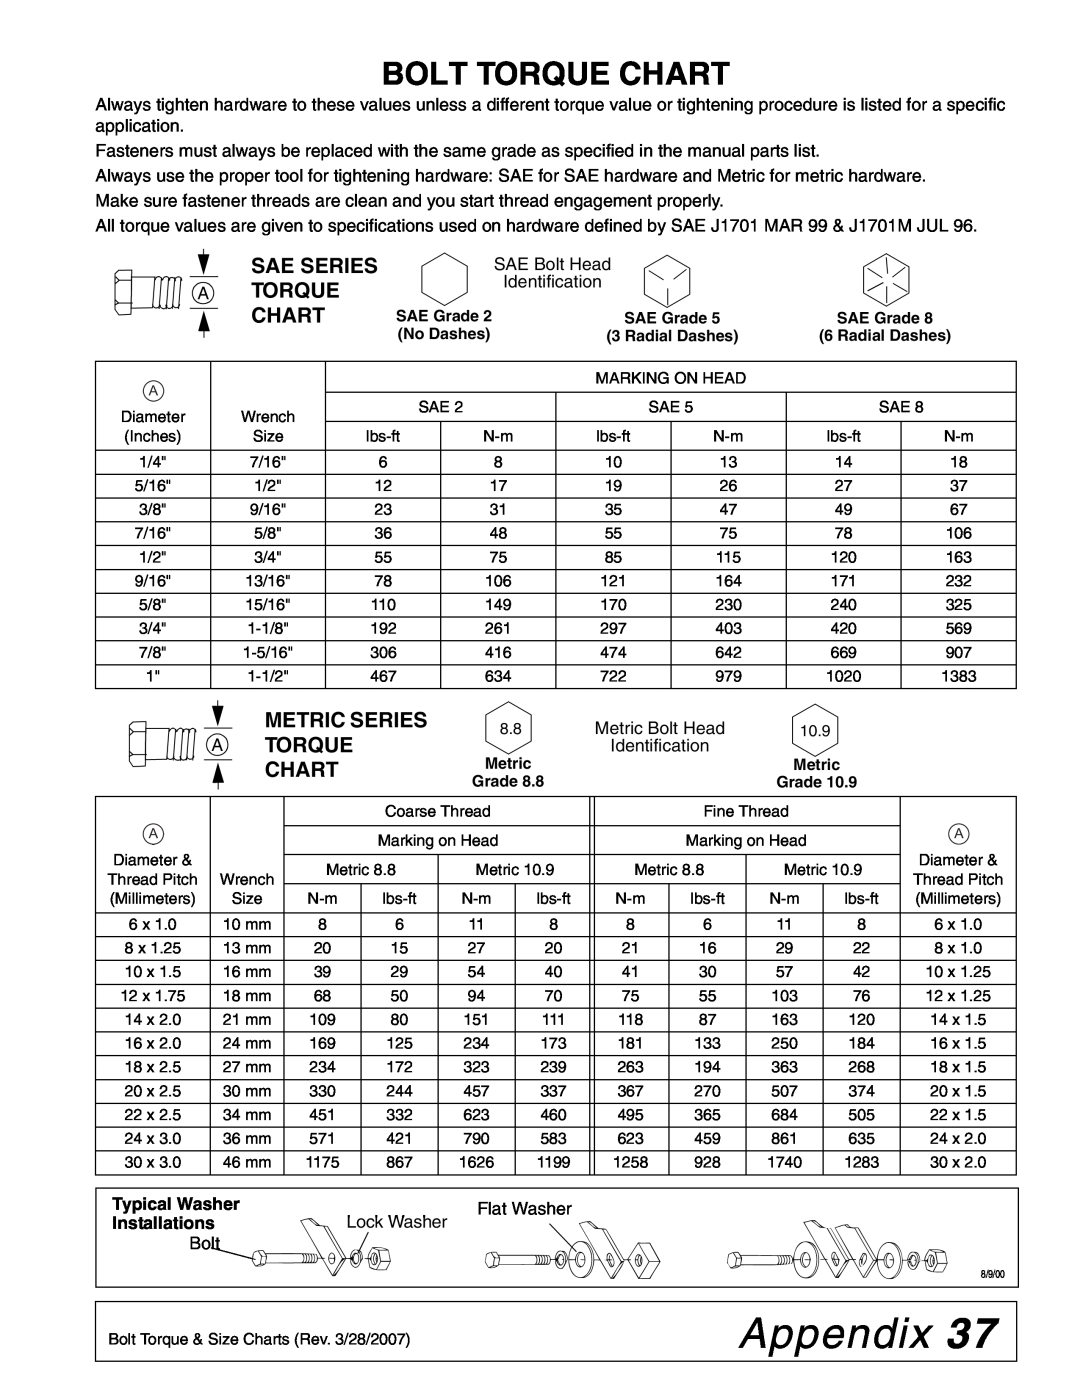 Woods Equipment TS44, TS52 manual Appendix, Bolt Torque Chart, Sae Series A Torque Chart, Metric Series A Torque Chart 